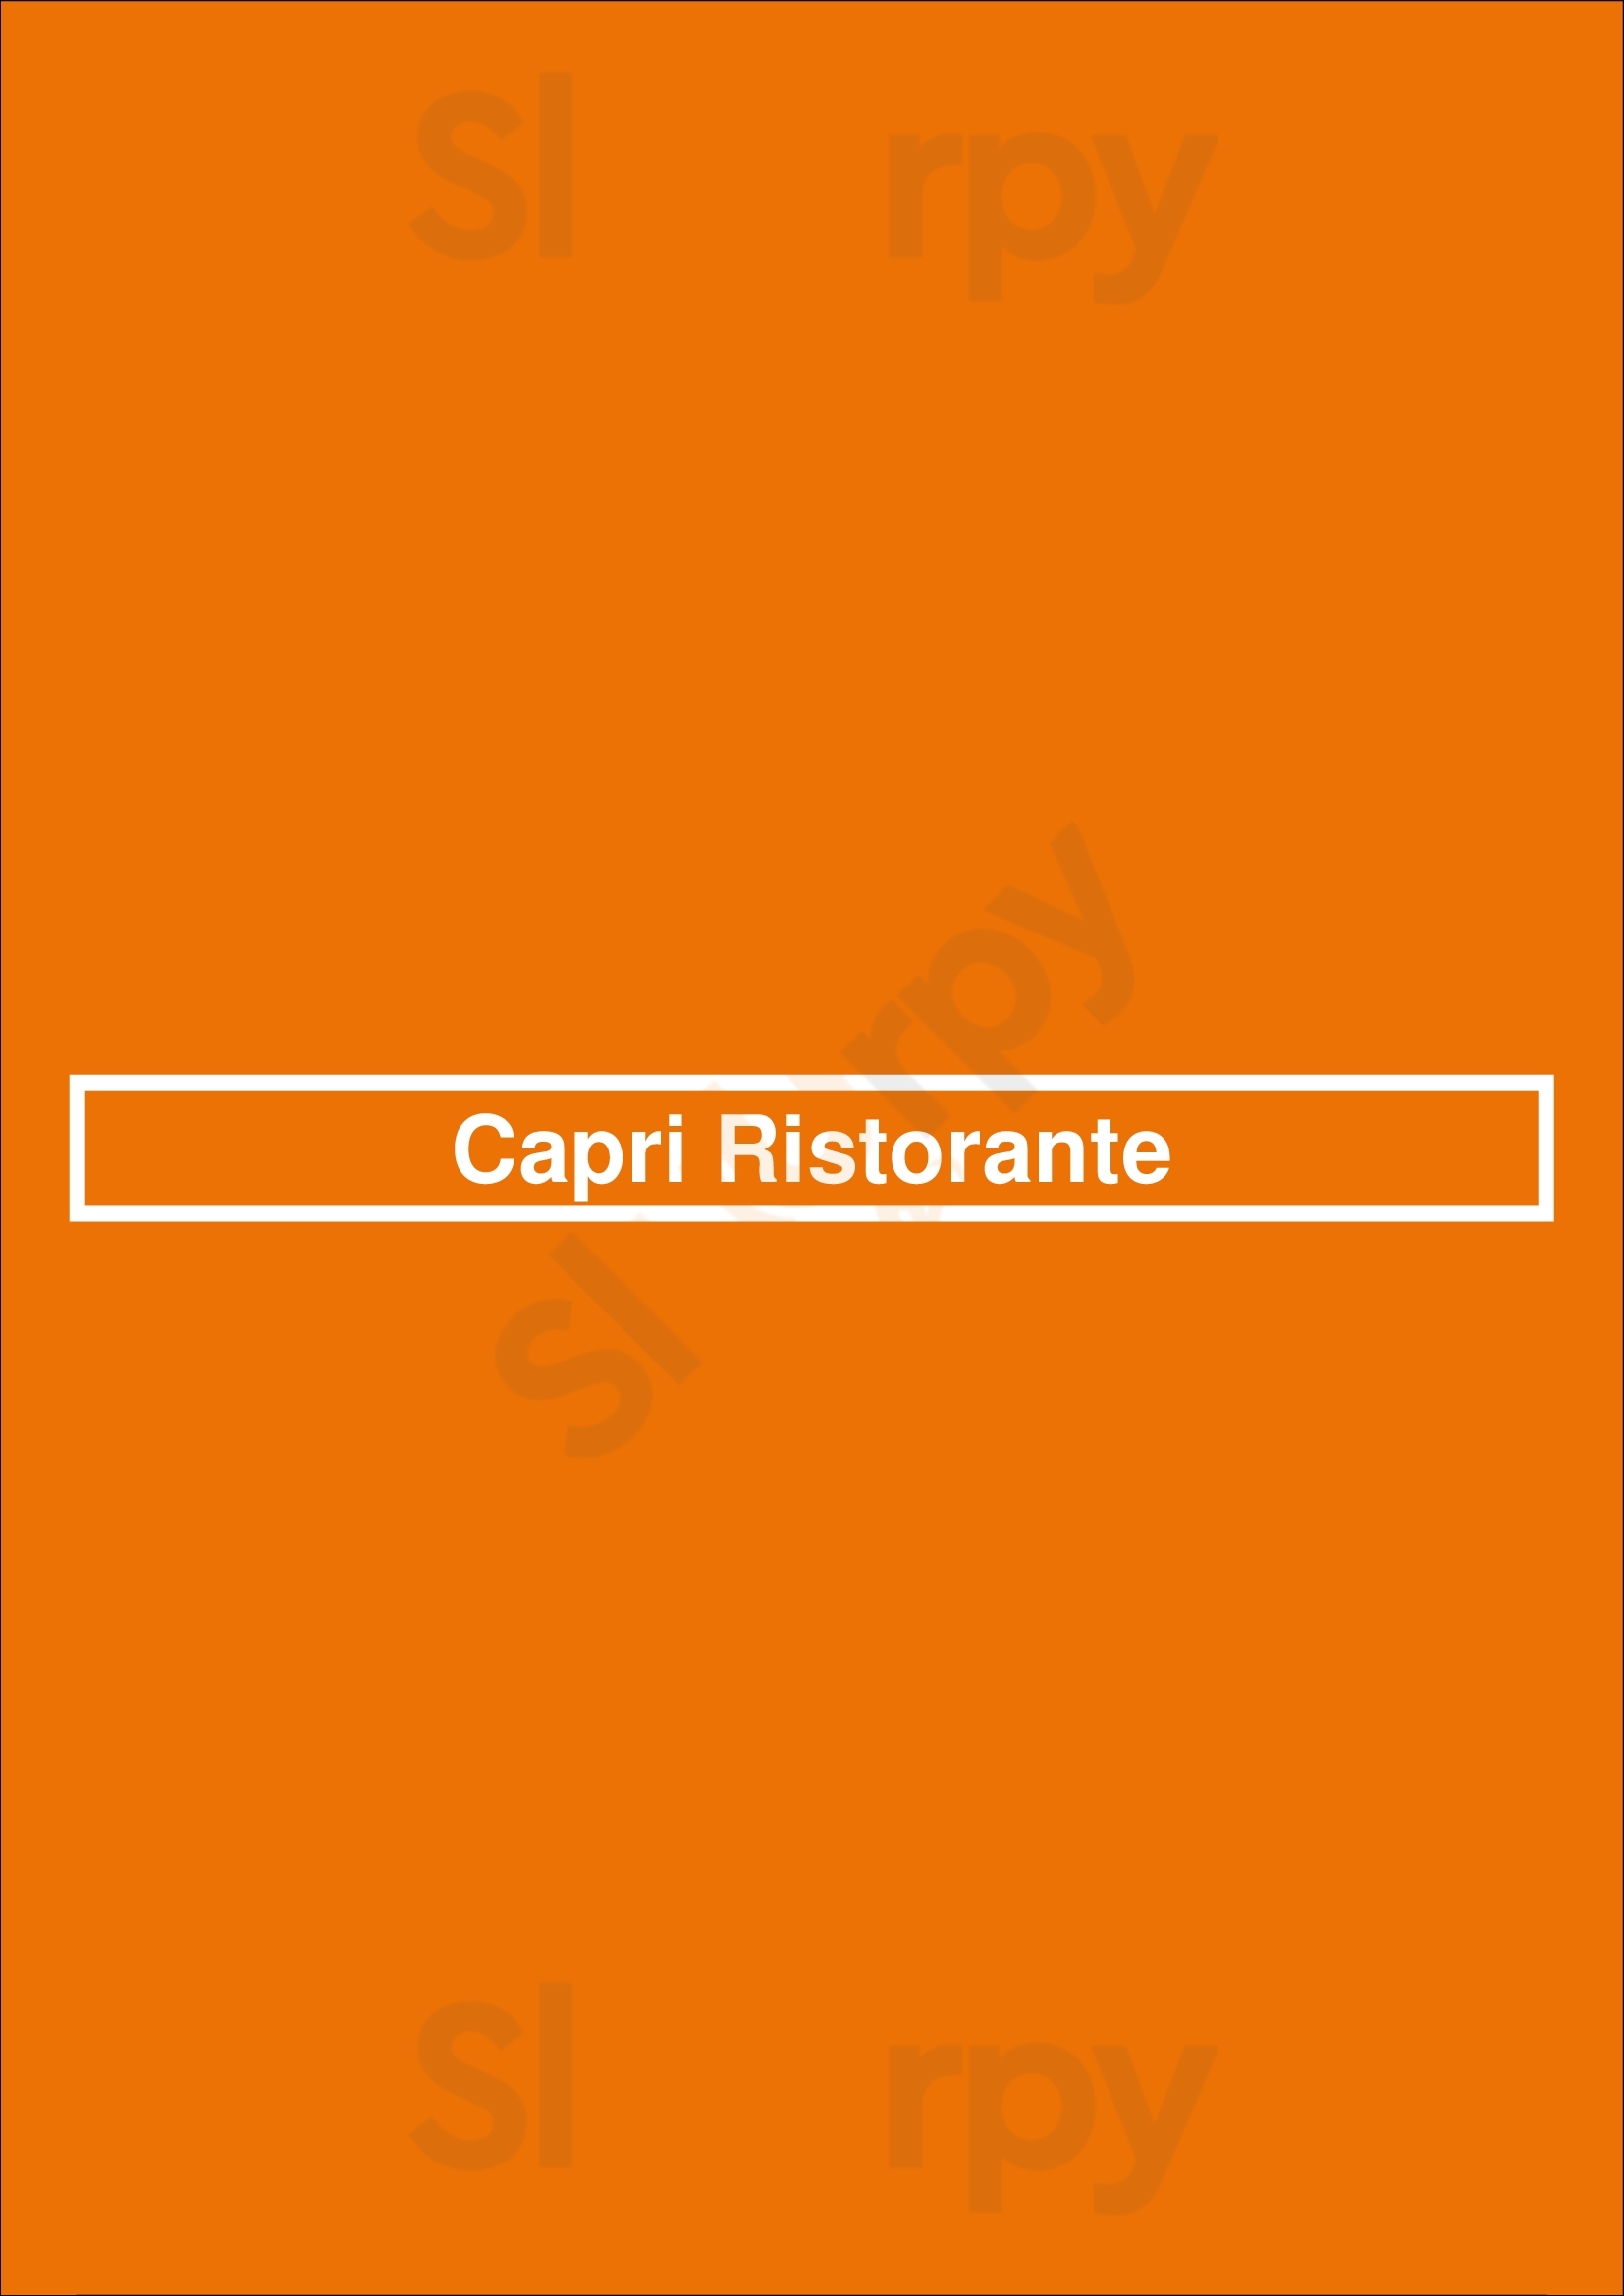 Capri Ristorante Burr Ridge Menu - 1